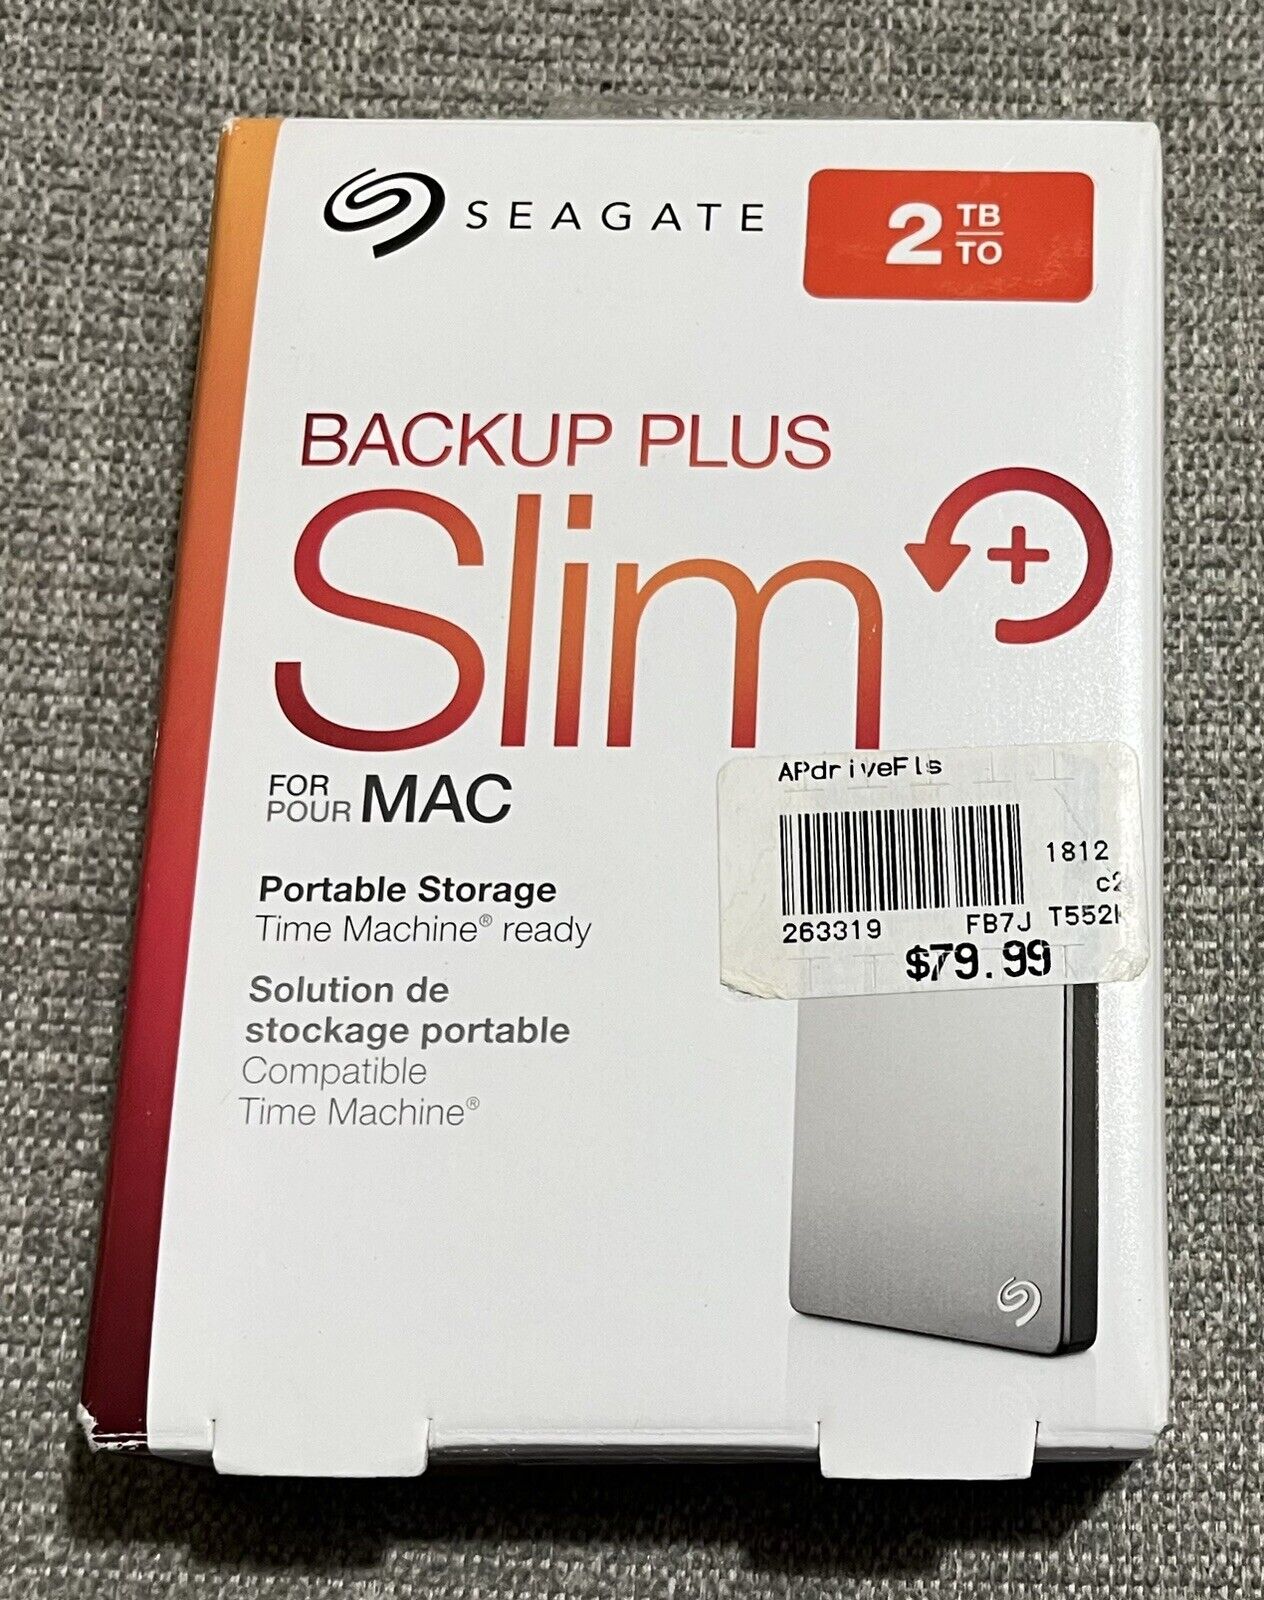 RARE NEW IN BOX Seagate FOR MAC Backup Plus Slim USB 3.0 2TB External Hard Drive